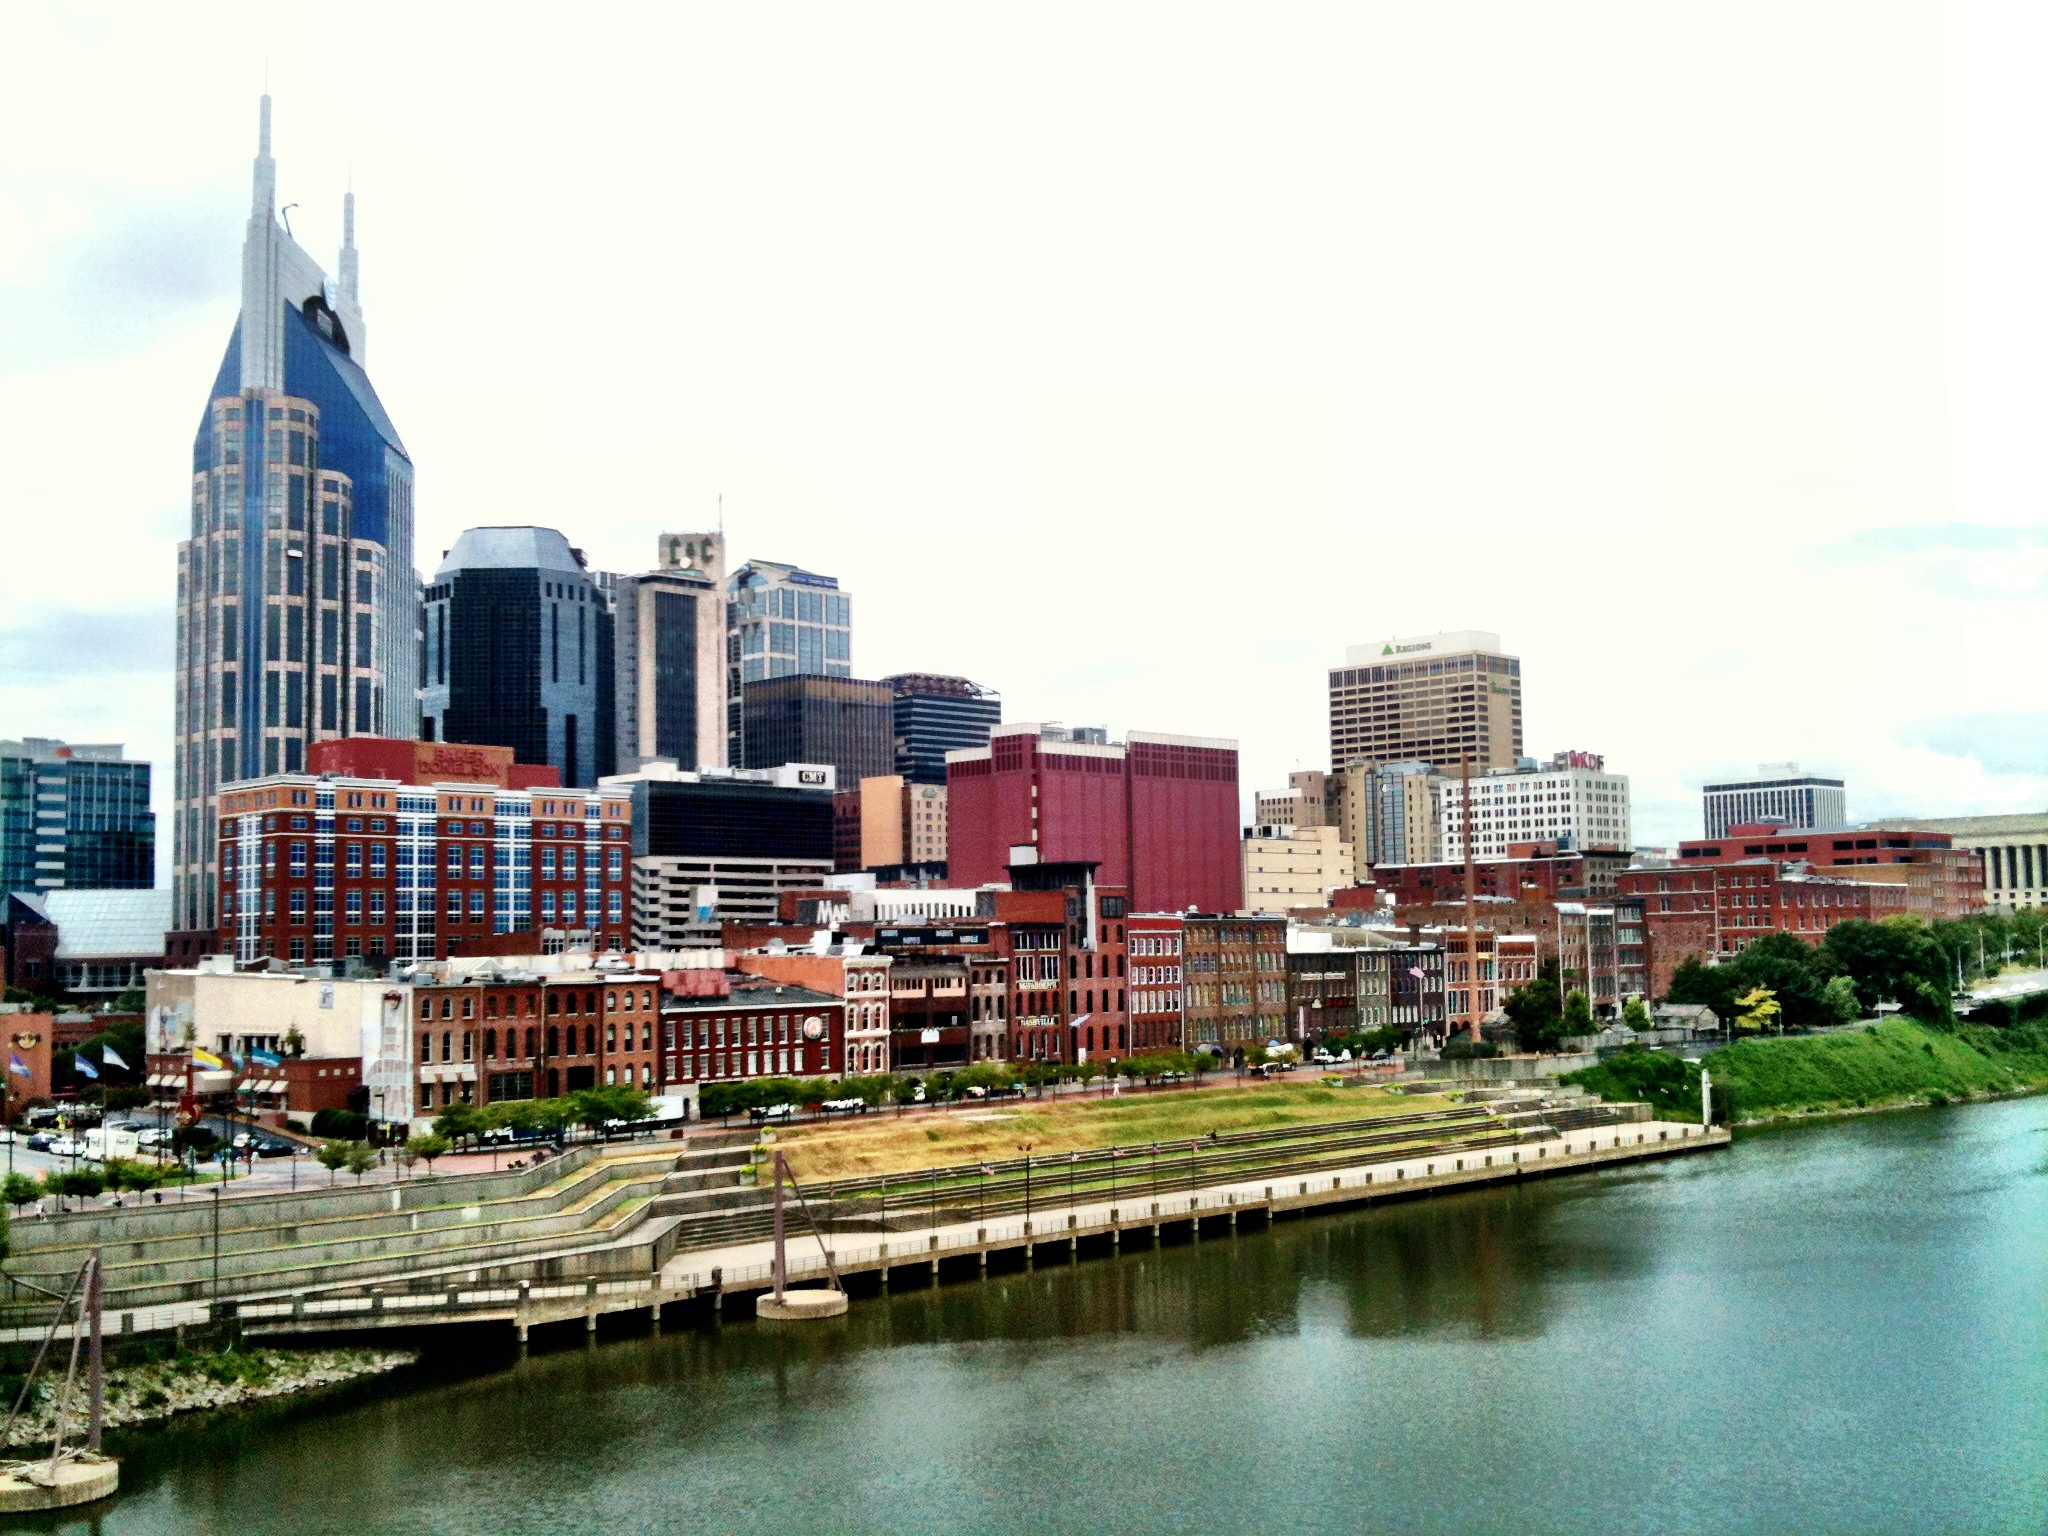 Nashville Property Values Increasing at 'Historic' Clip 